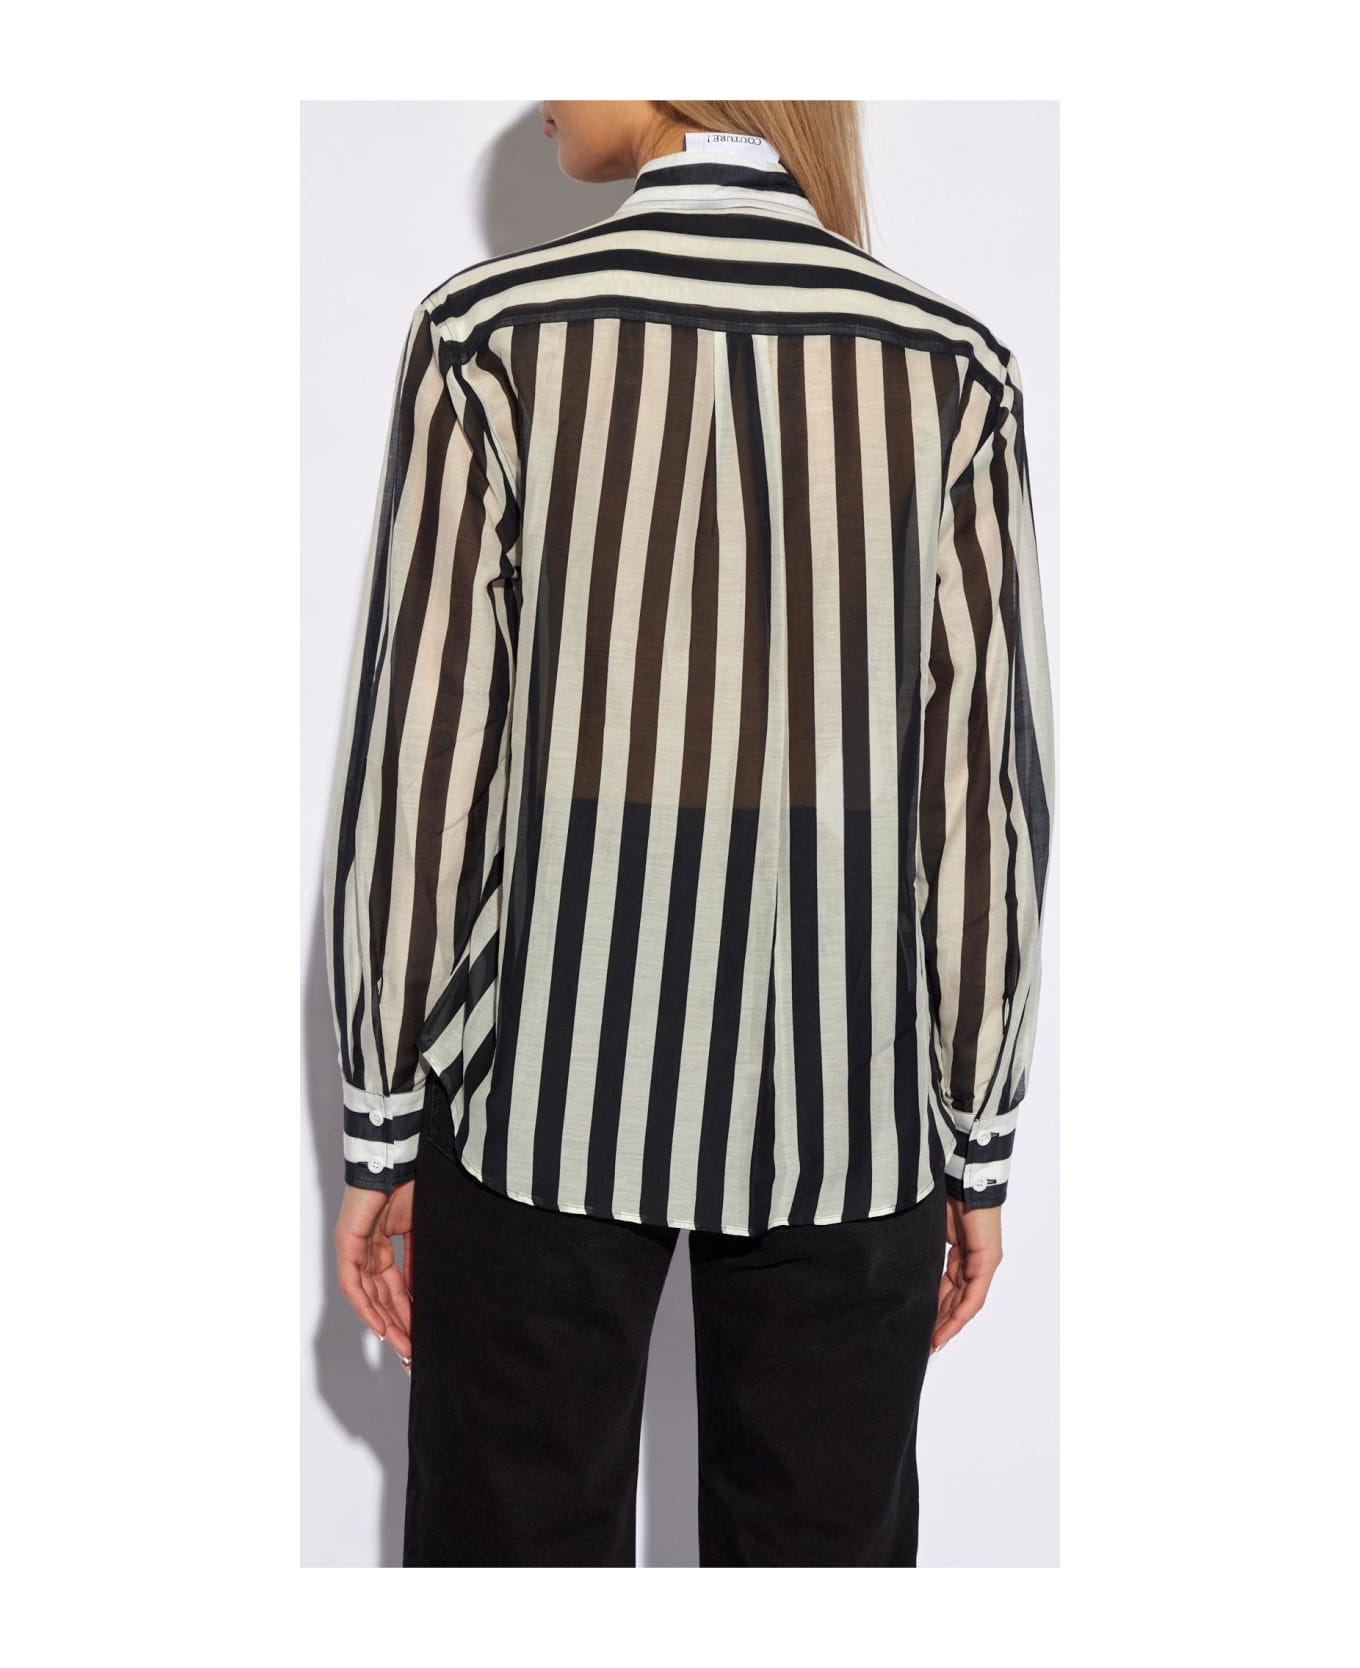 Moschino Striped Shirt - BLACK